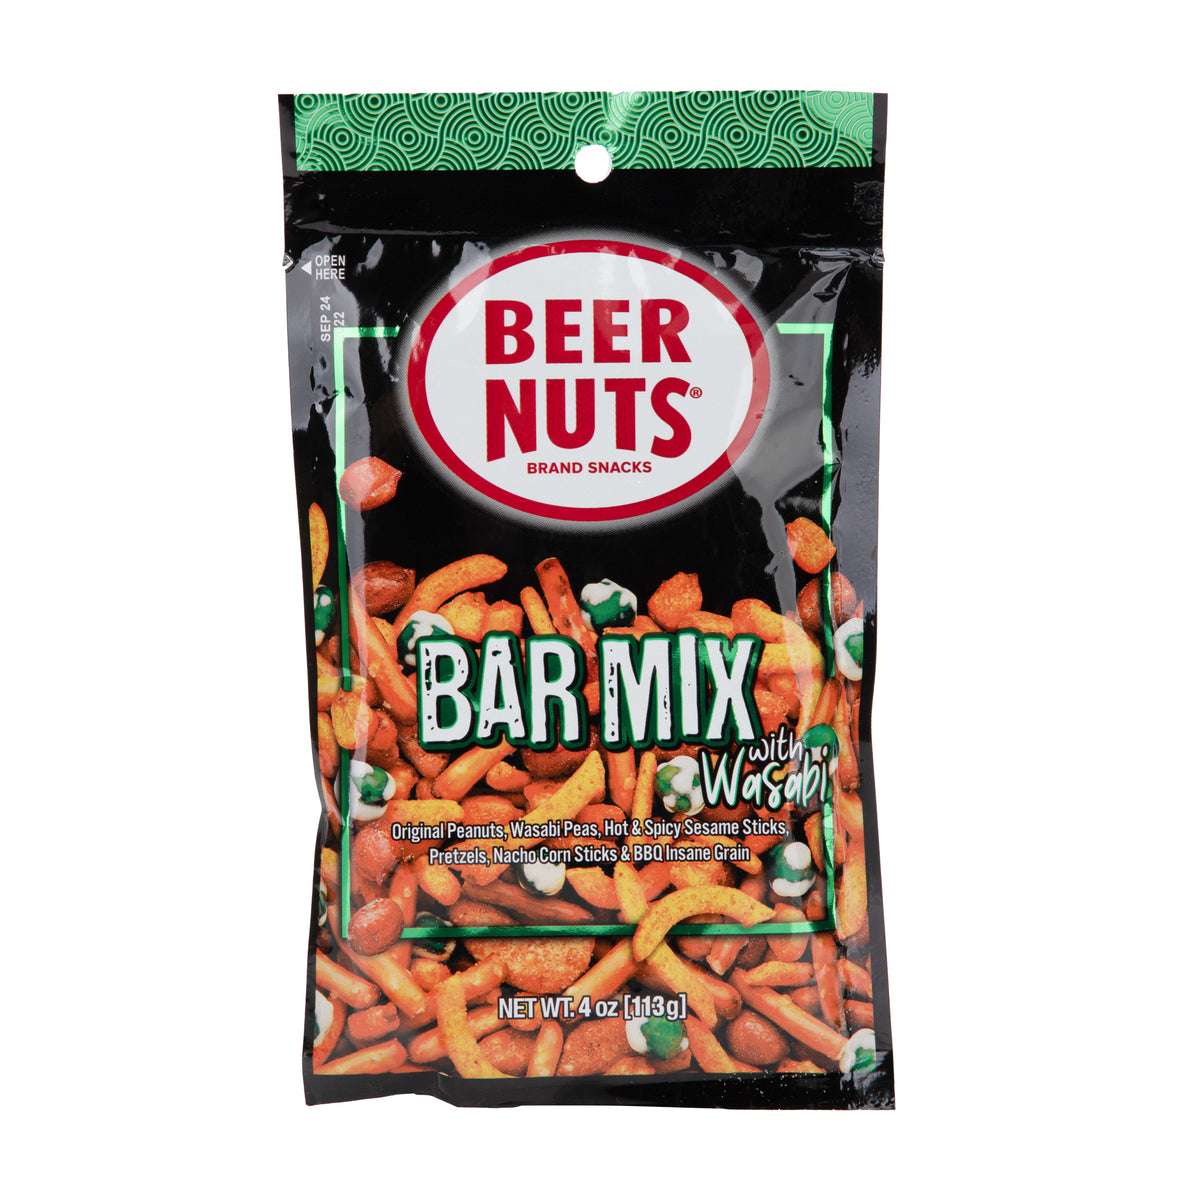 BEER NUTS® Brand Snacks, Original Bar Mix 12-Count 2 oz. Clip Strips -  Case of 6